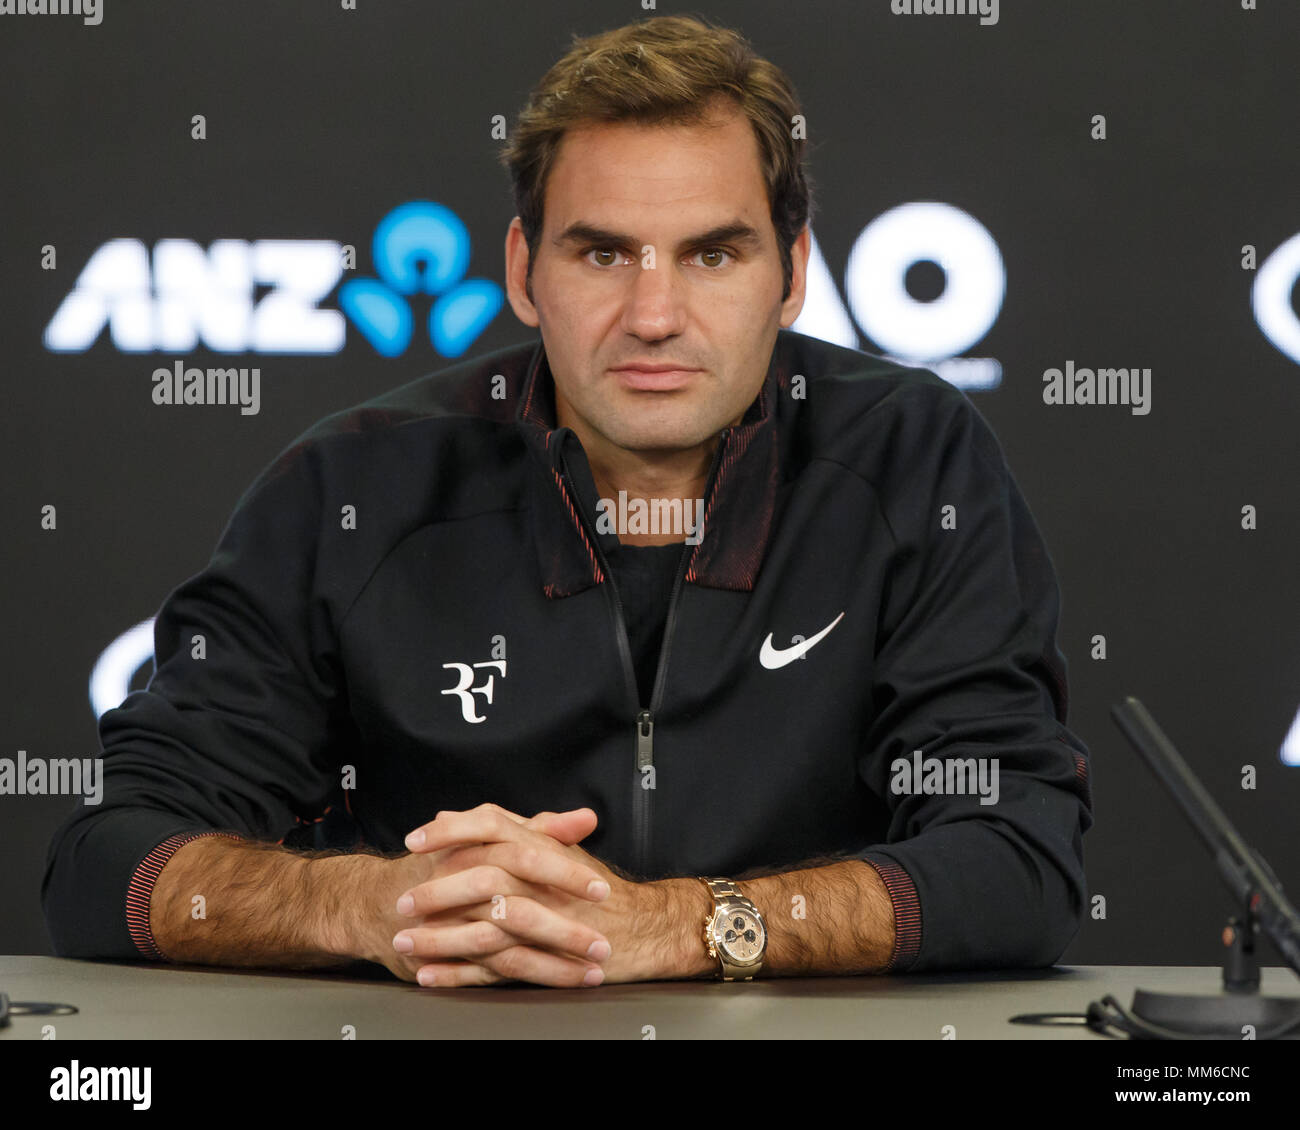 Federer Portrait Stock Photos & Federer Portrait Stock Images - Alamy